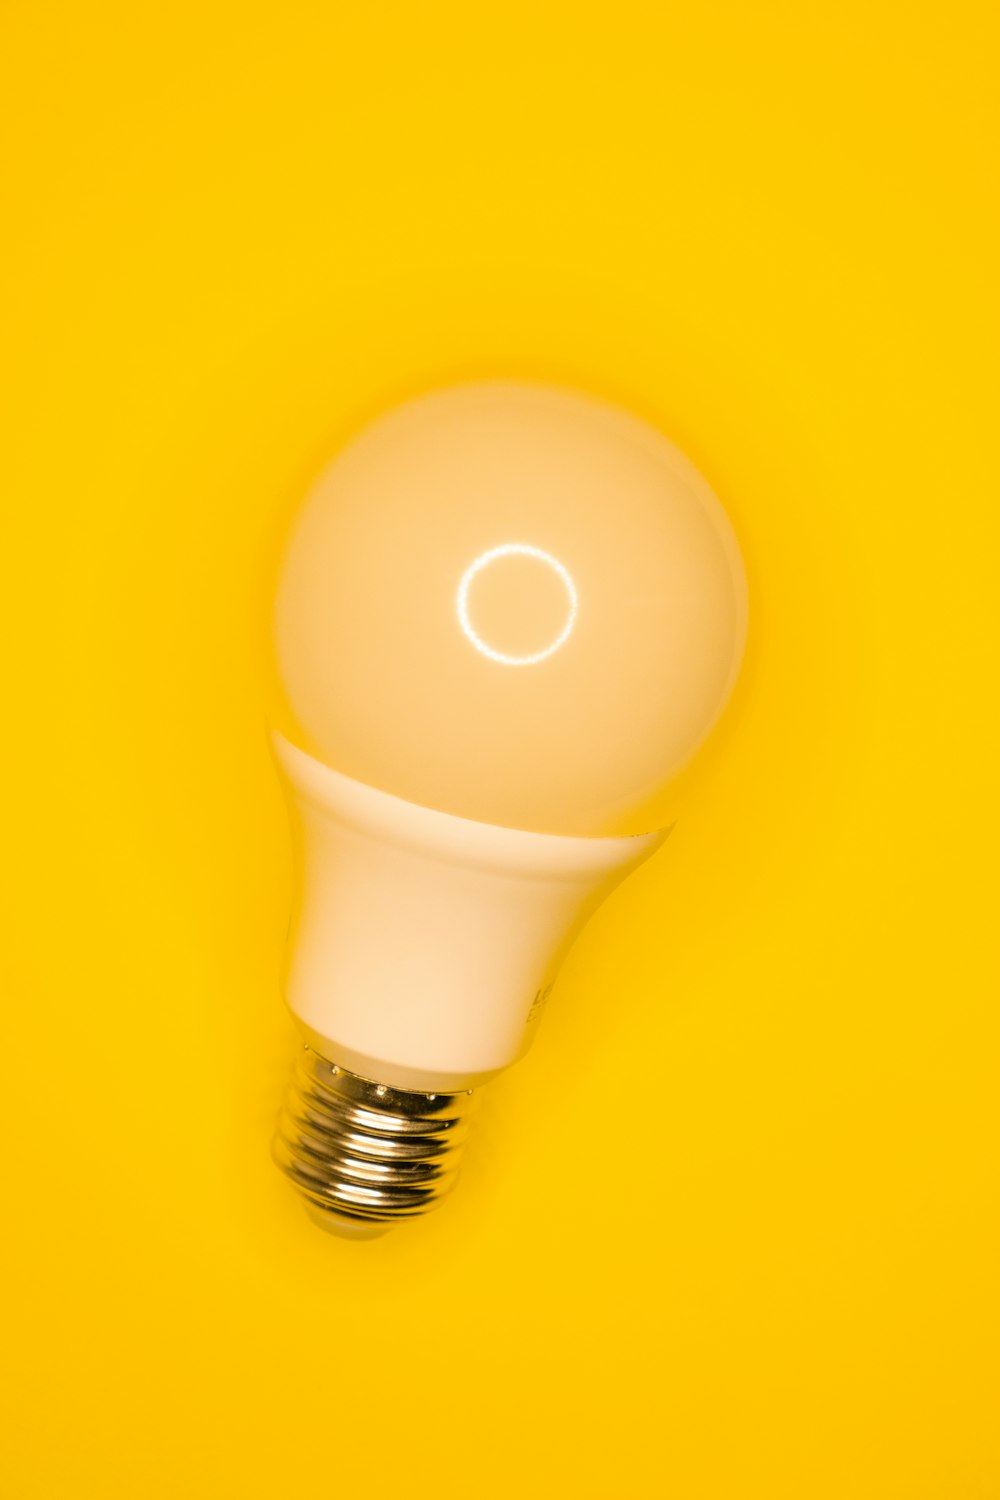 lampadina bianca su superficie gialla